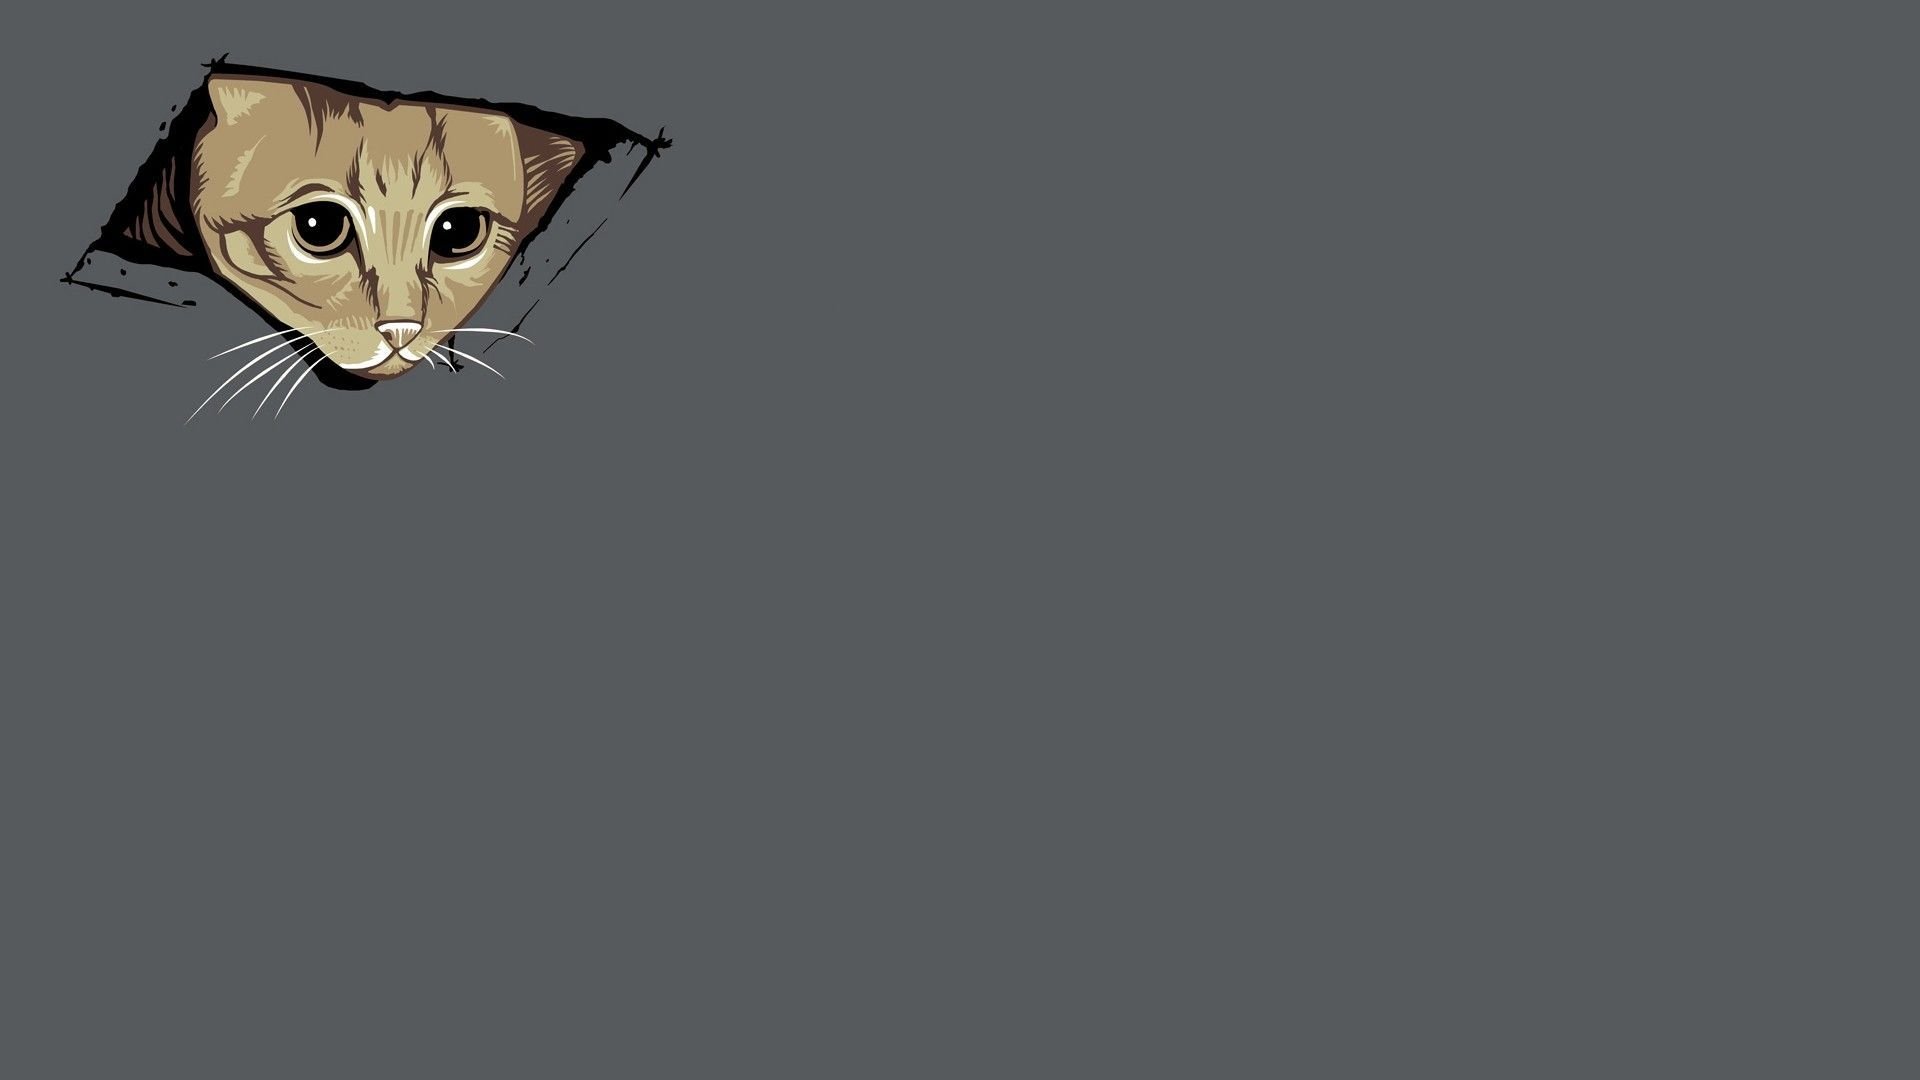  Minimalist  Cat  Desktop Wallpapers Wallpaper Cave